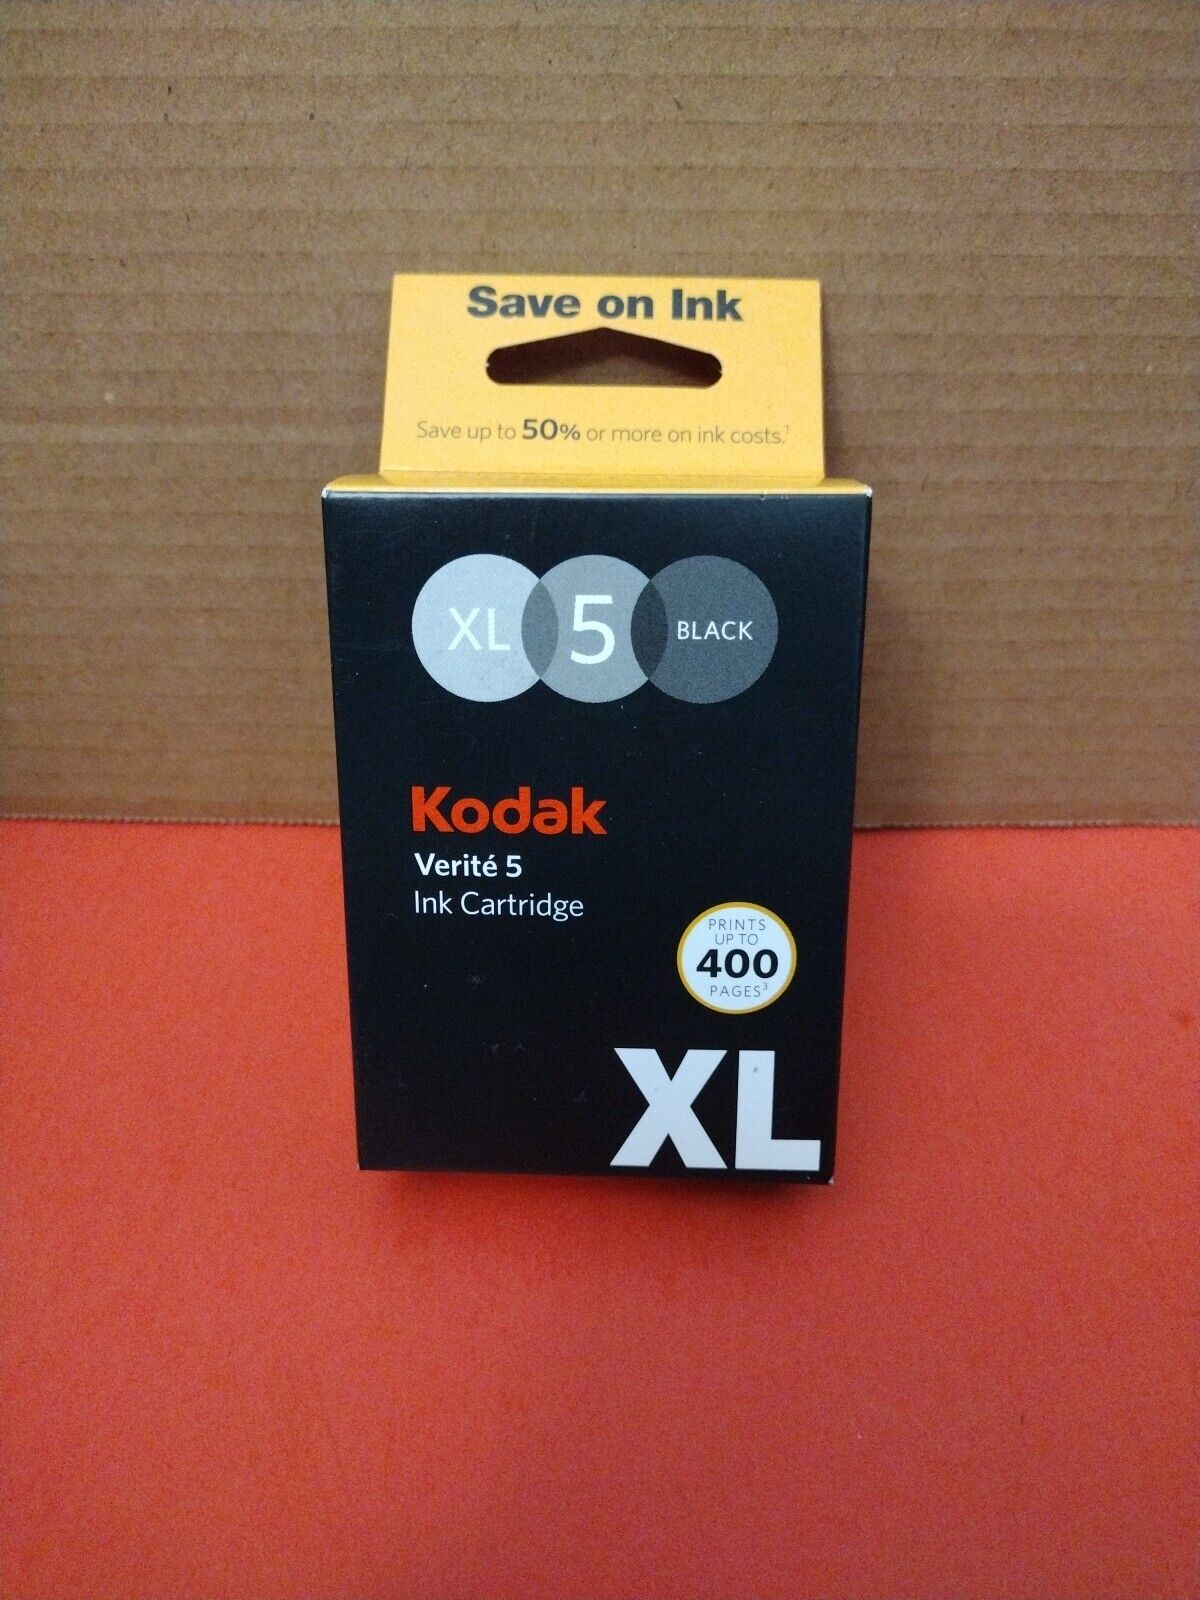 Kodak Verite 5 XL Black Ink Cartridge Printer Ink NEW SEALED ***FREE SHIPPING***